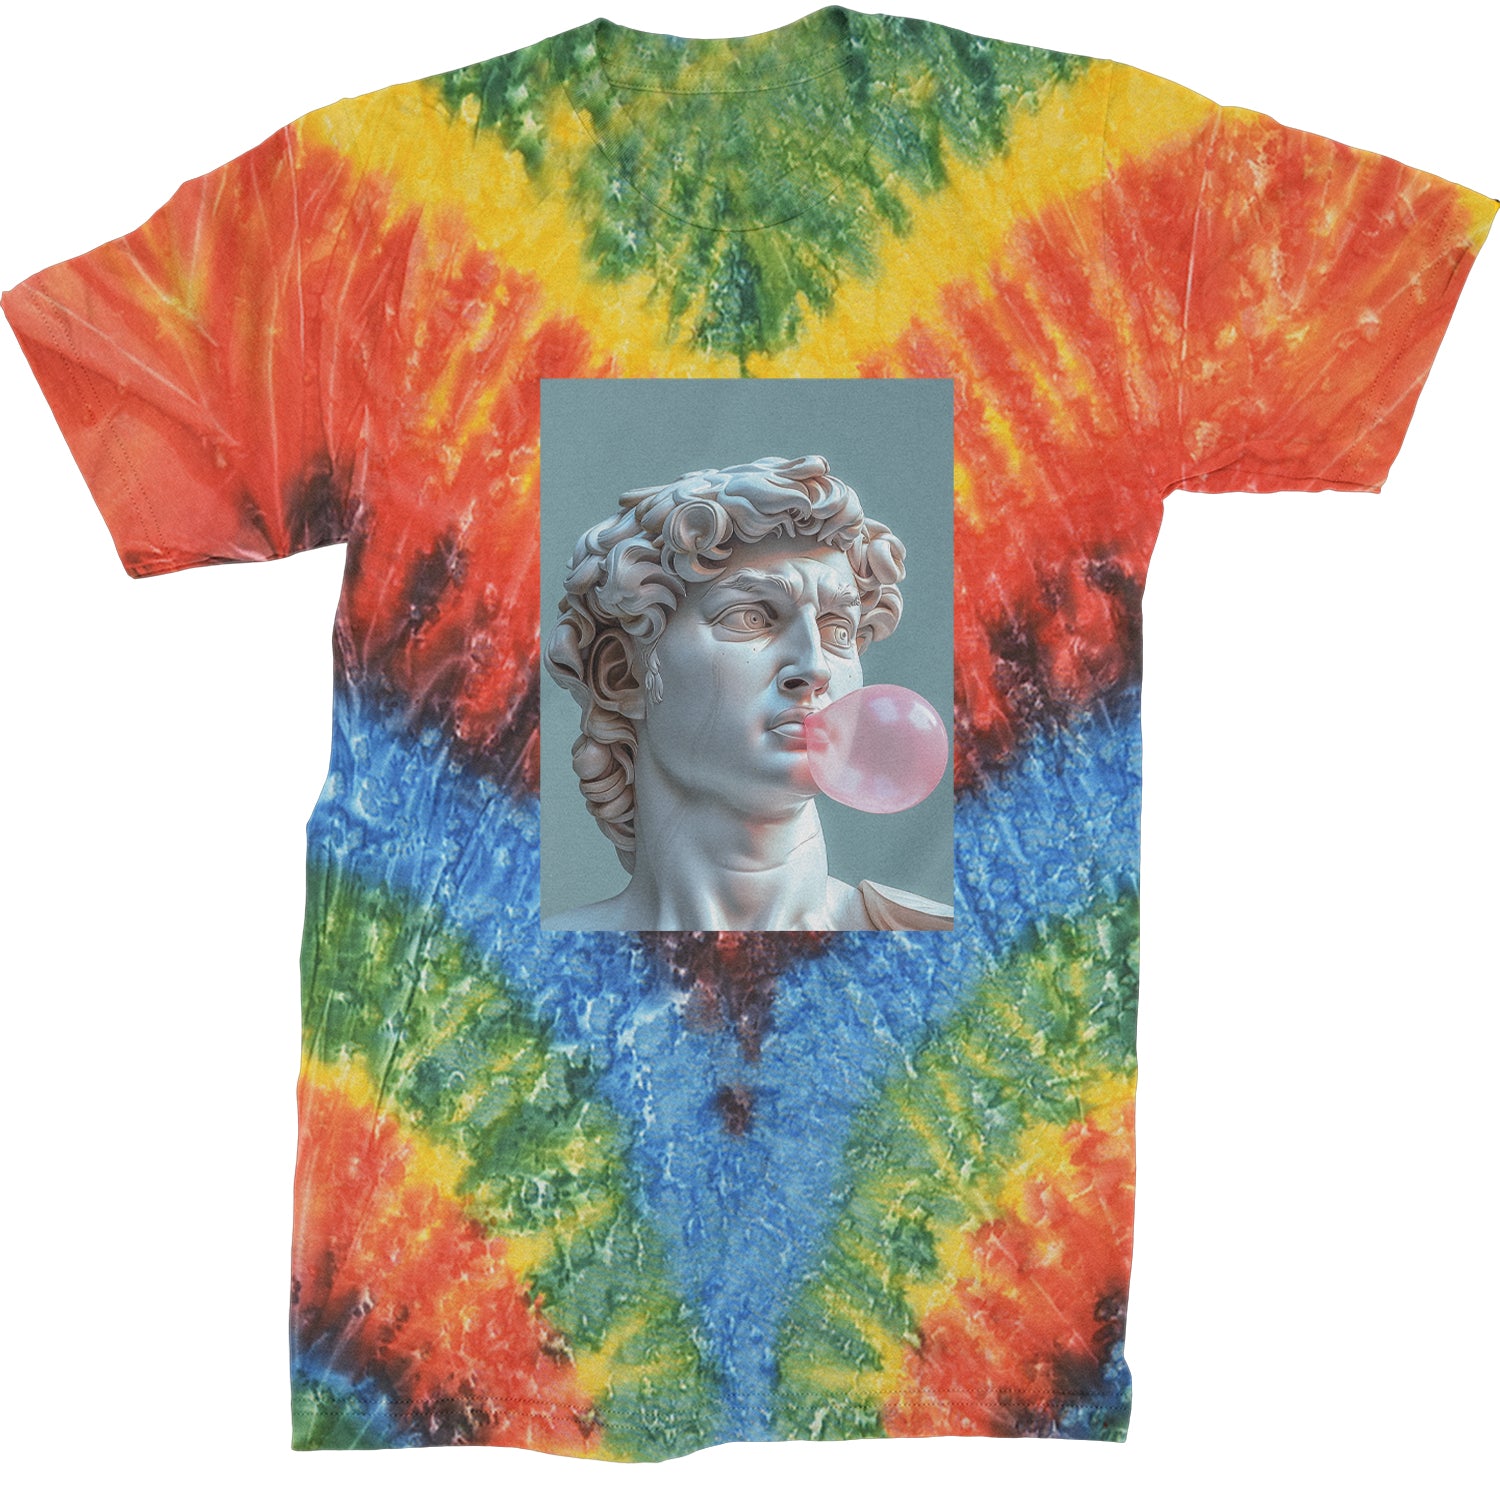 Michelangelo's David with Bubble Gum Contemporary Statue Art Mens T-shirt Tie-Dye Woodstock